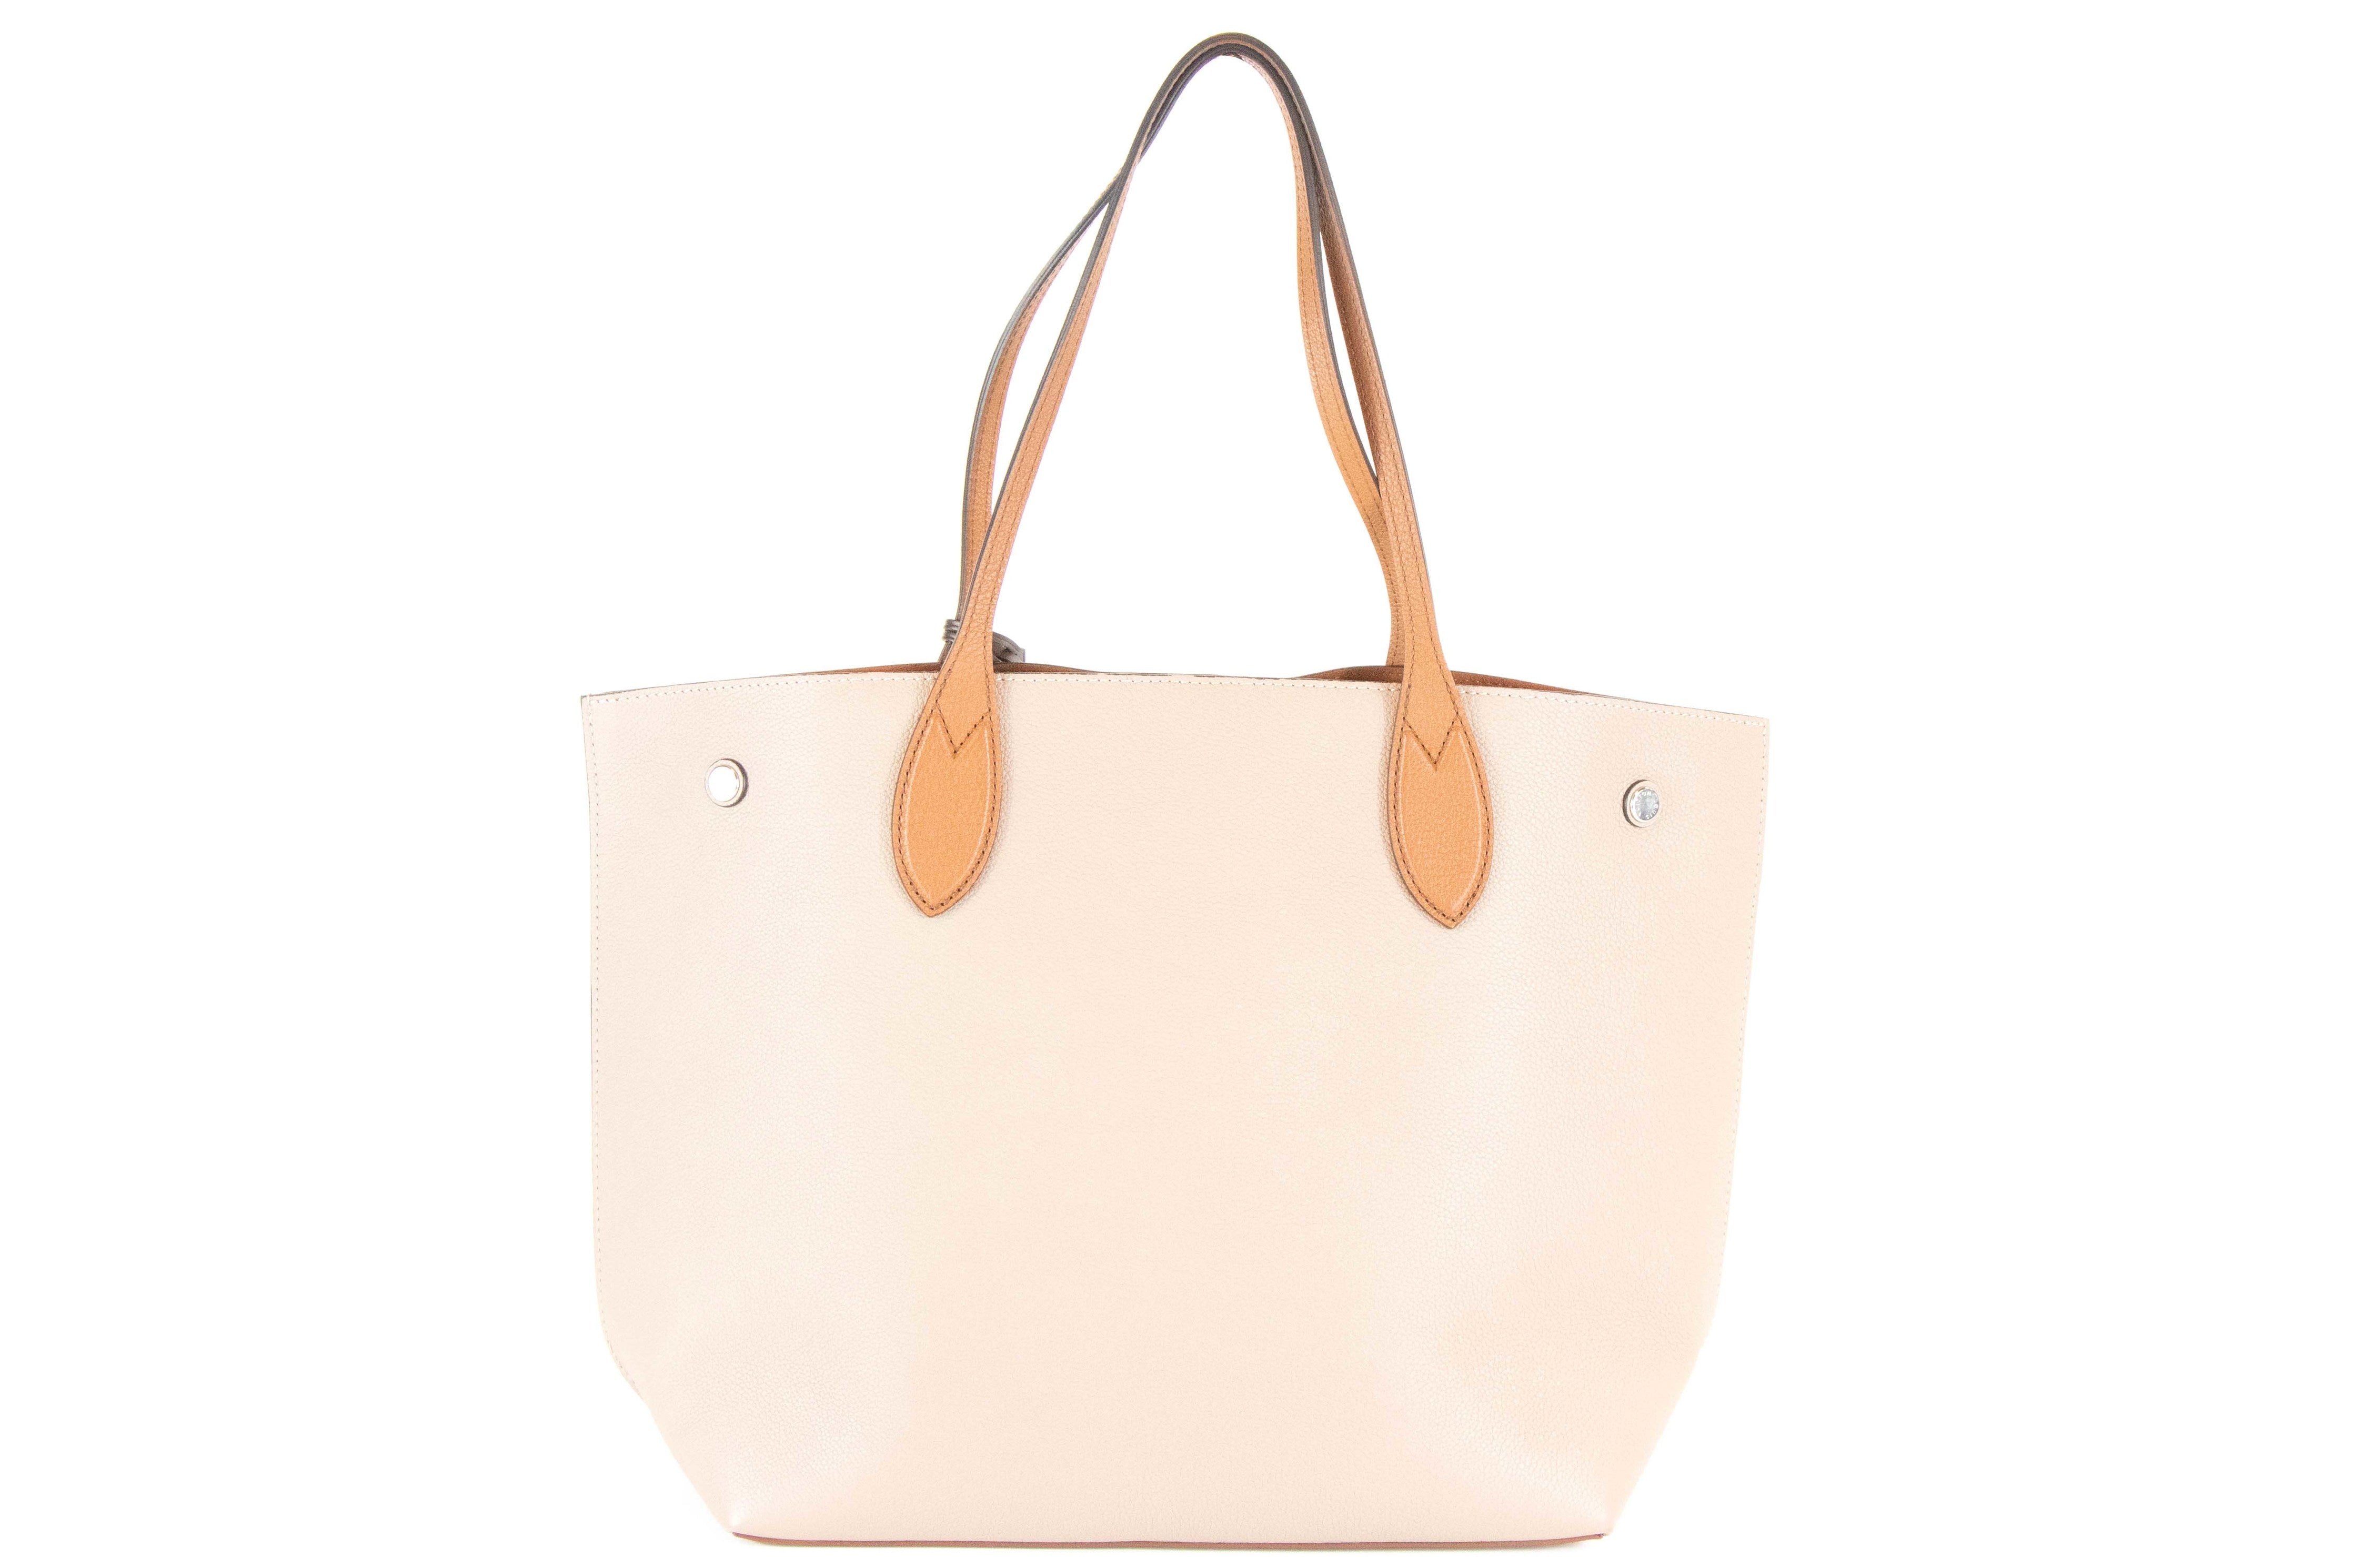 Help me pick a bag - Lockme Shopper or Neverfull